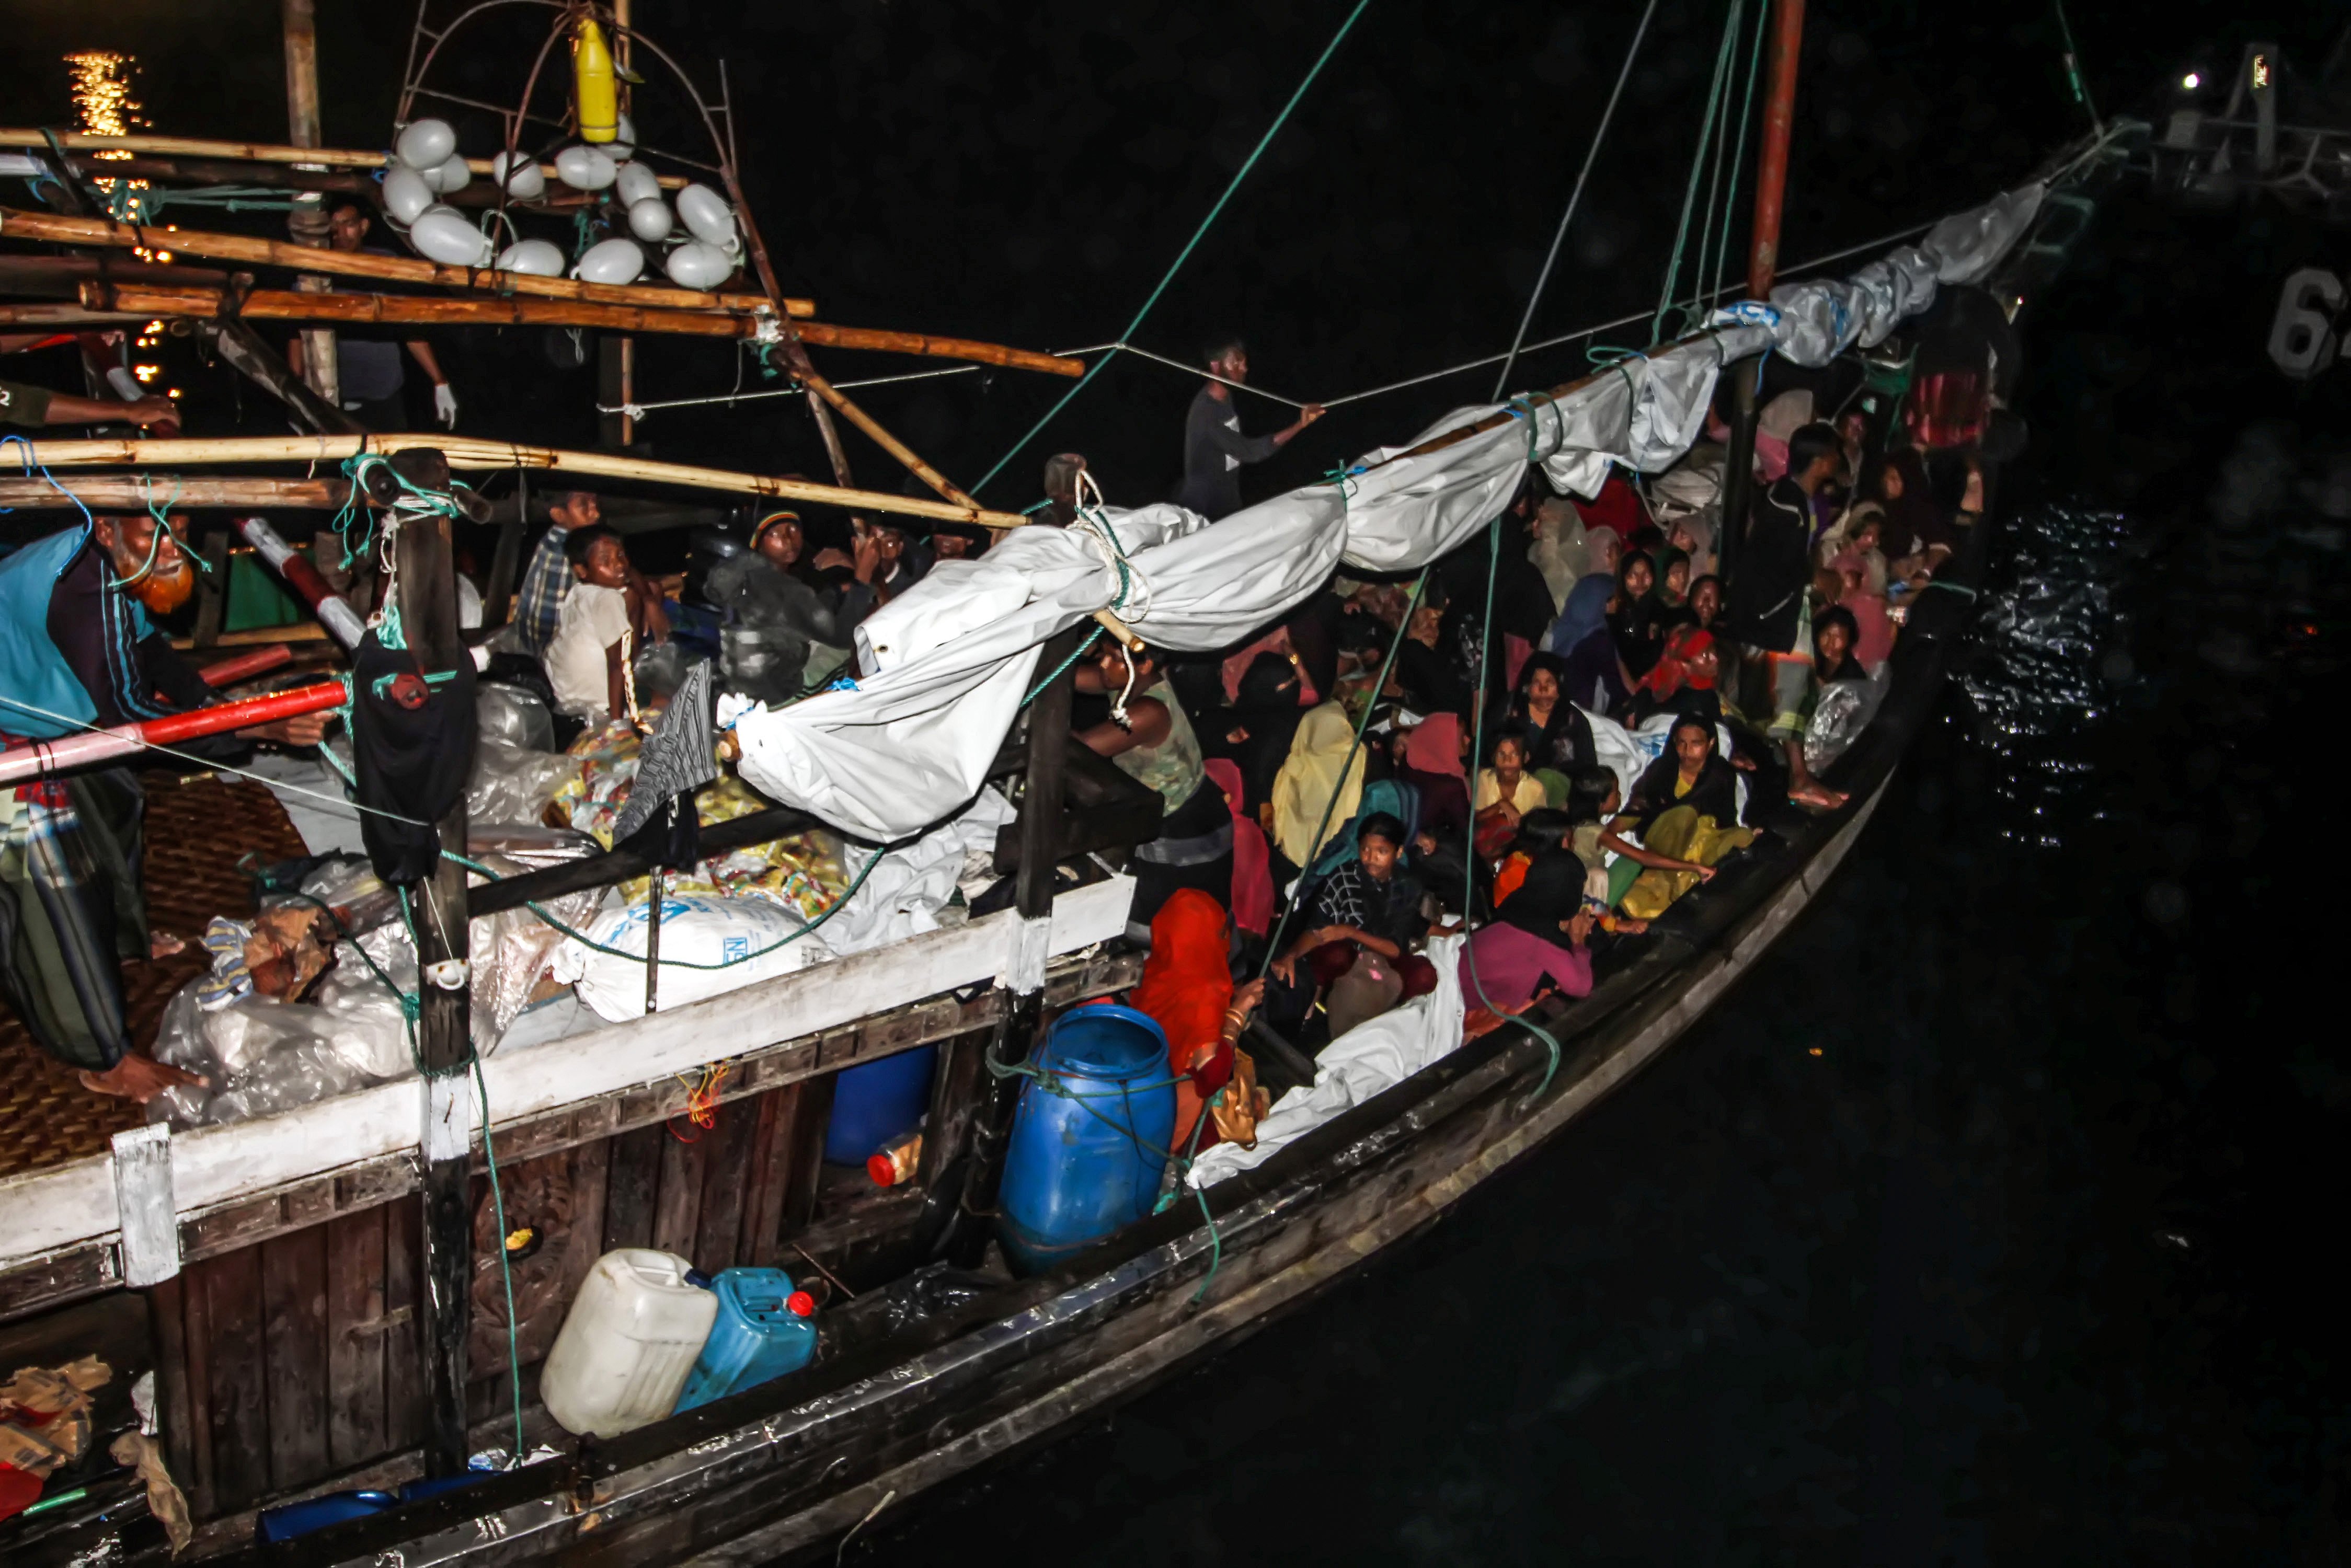 Pengungsi etnis Rohingya menunggu di atas kapal saat proses evakuasi oleh TNI AL ke Pelabuhan ASEAN, Krueng Geukuh, Aceh Utara, Aceh, Jumat (31/12/2021). Pemerintah Indonesia melalui Satgas Penanganan Pengungsi Luar Negeri (PPLN) mempertimbangkan keadaan darurat dan sisi kemanusiaan sehingga memutuskan untuk menyelamatkan 120 orang etnis Rohingya terdiri dari tujuh laki-laki, 62 perempuan dan 51 anak-anak yang terdampar di perairan laut Aceh pada Sabtu (25/12/2021). ANTARA FOTO/Rahmad/nym.